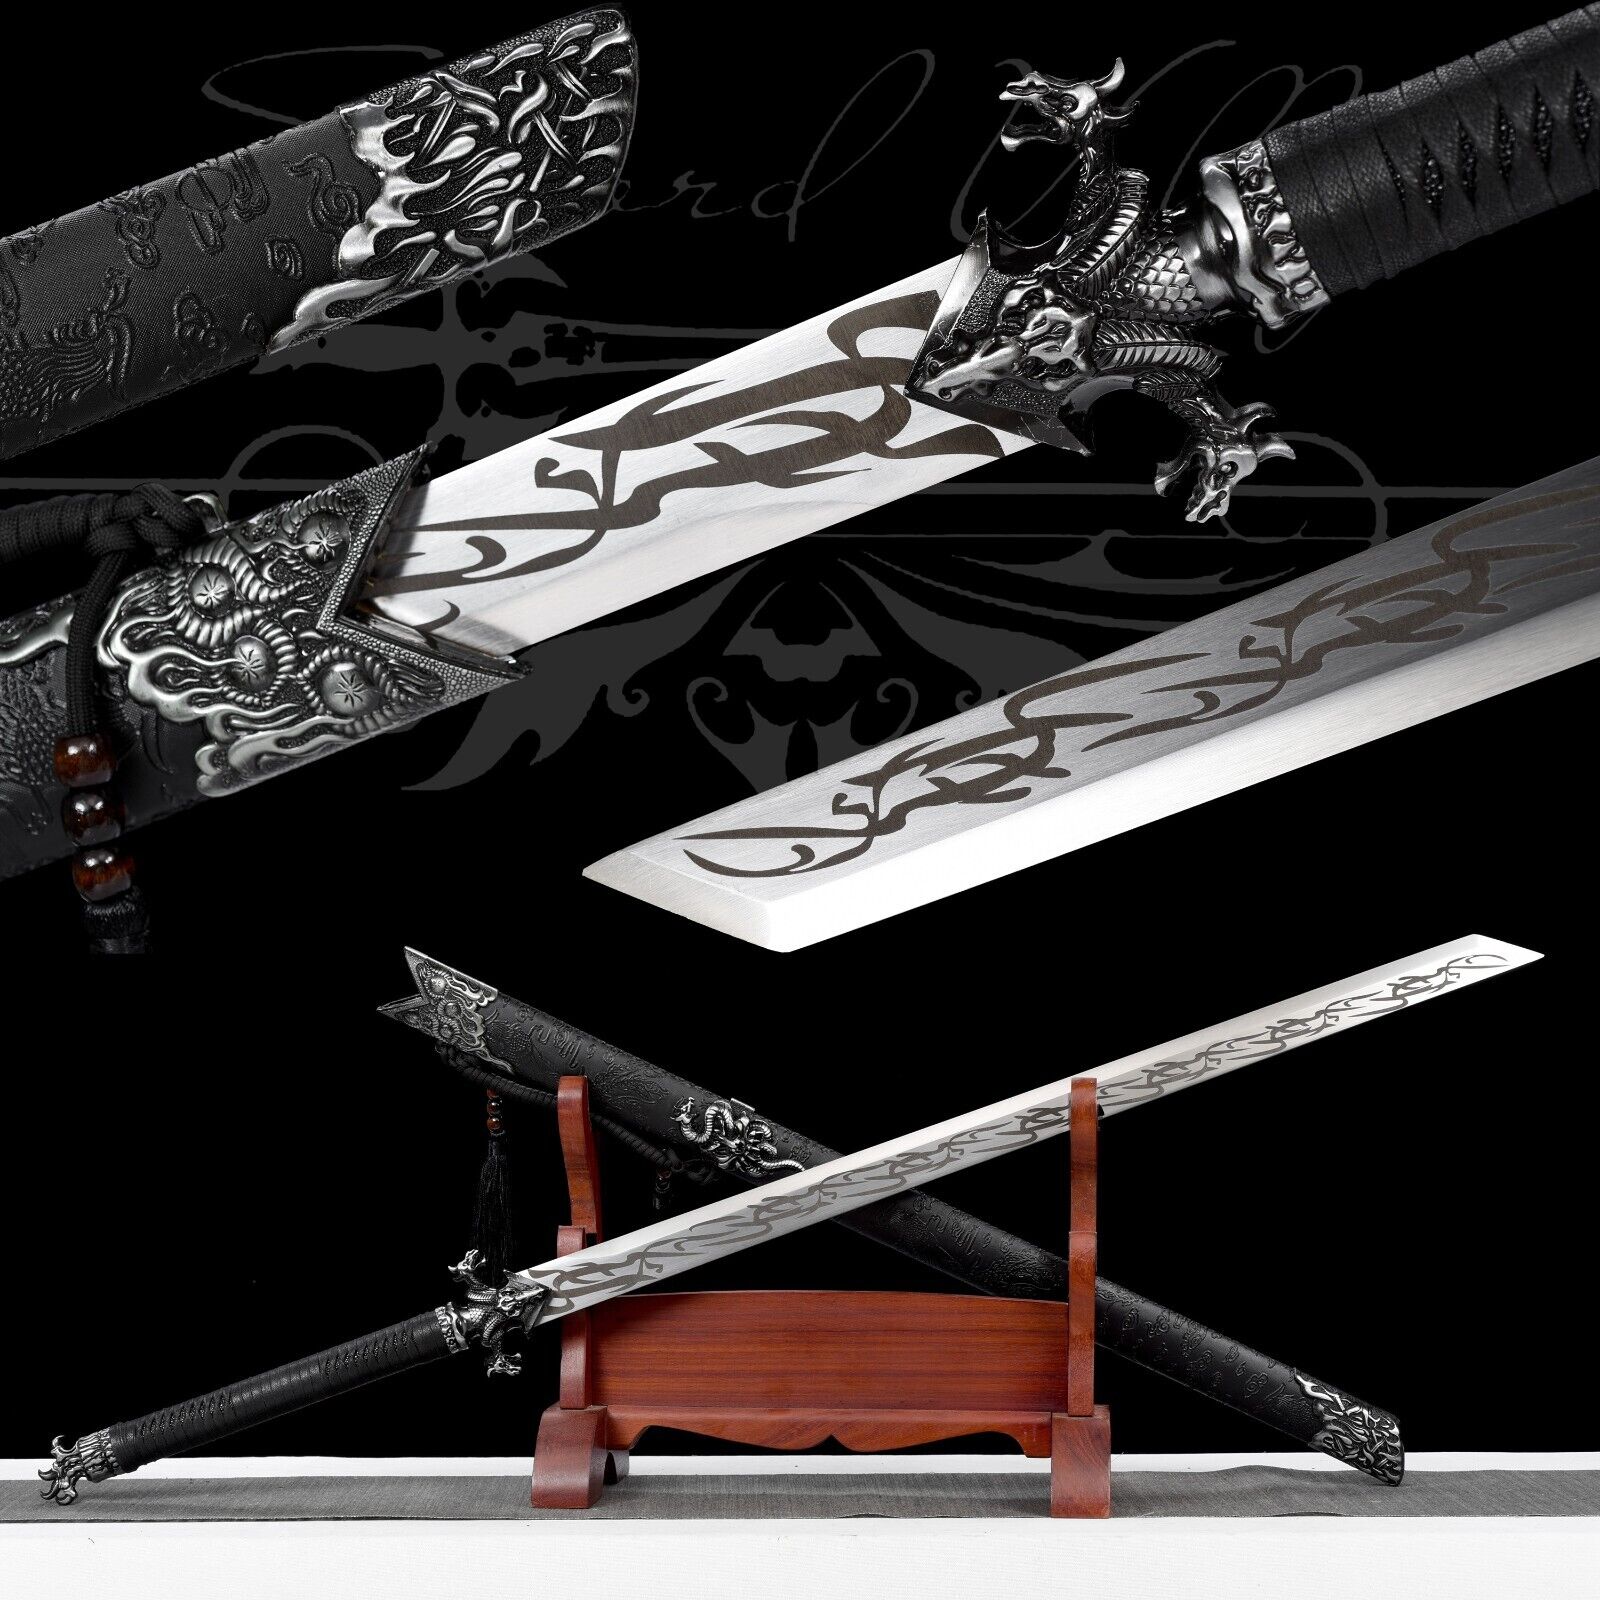 Handmade Katana/Manganese Steel/Collectible Sword/Real Weapon/Battle Ready